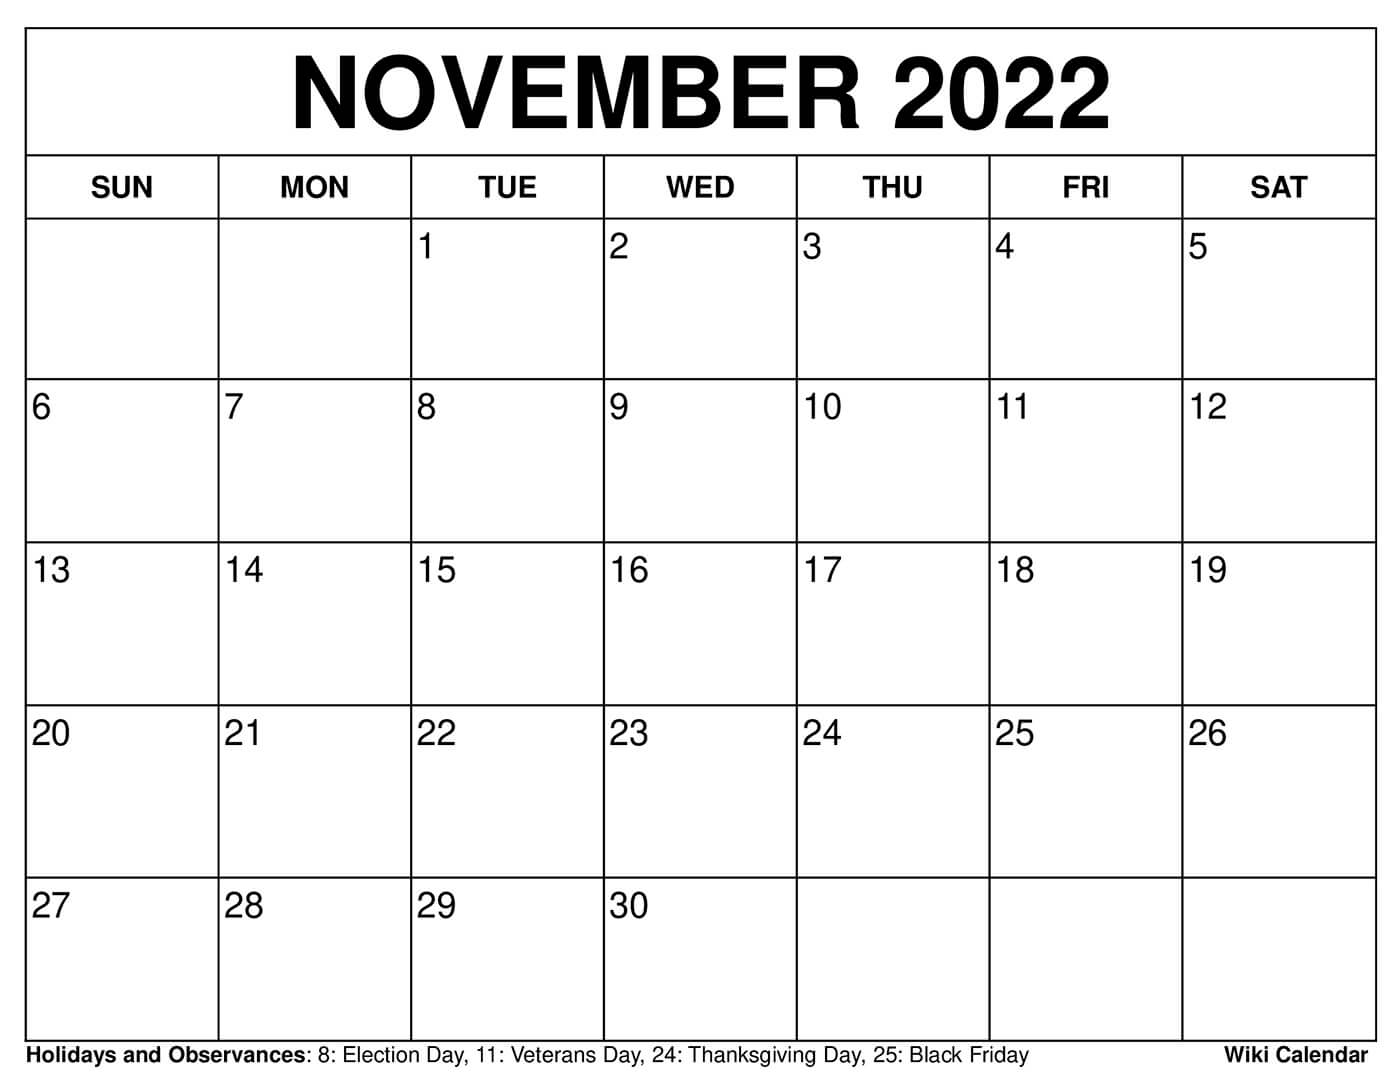 November 2022 Calendar Free Printable Free Printable November 2022 Calendars - Wiki Calendar